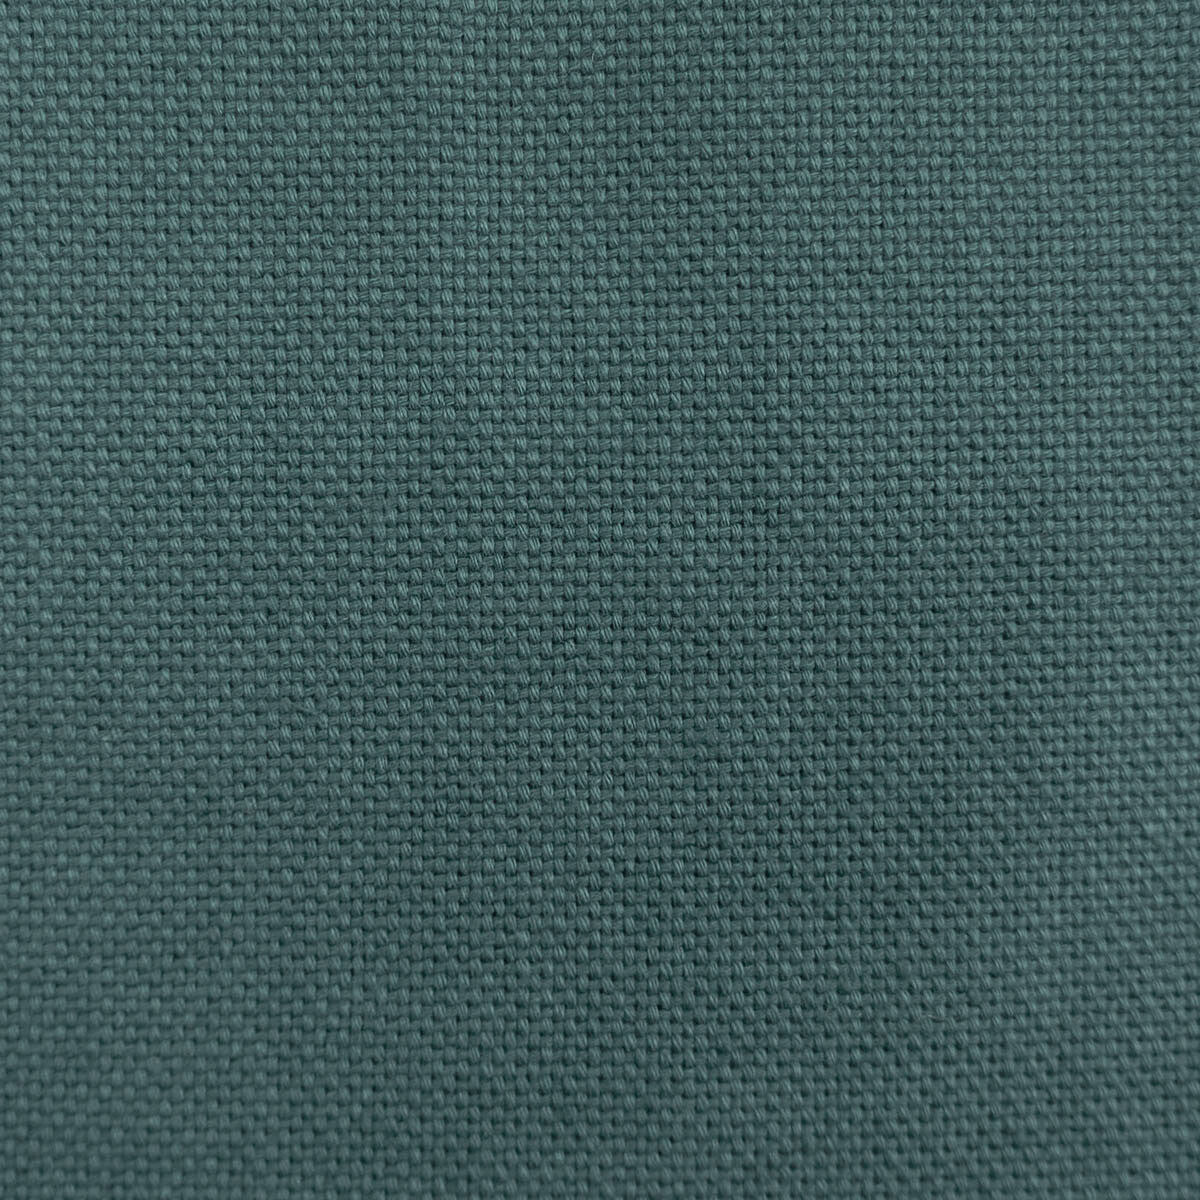 Dobra fabric in verde azulado color - pattern LCT1075.041.0 - by Gaston y Daniela in the Lorenzo Castillo VII The Rectory collection